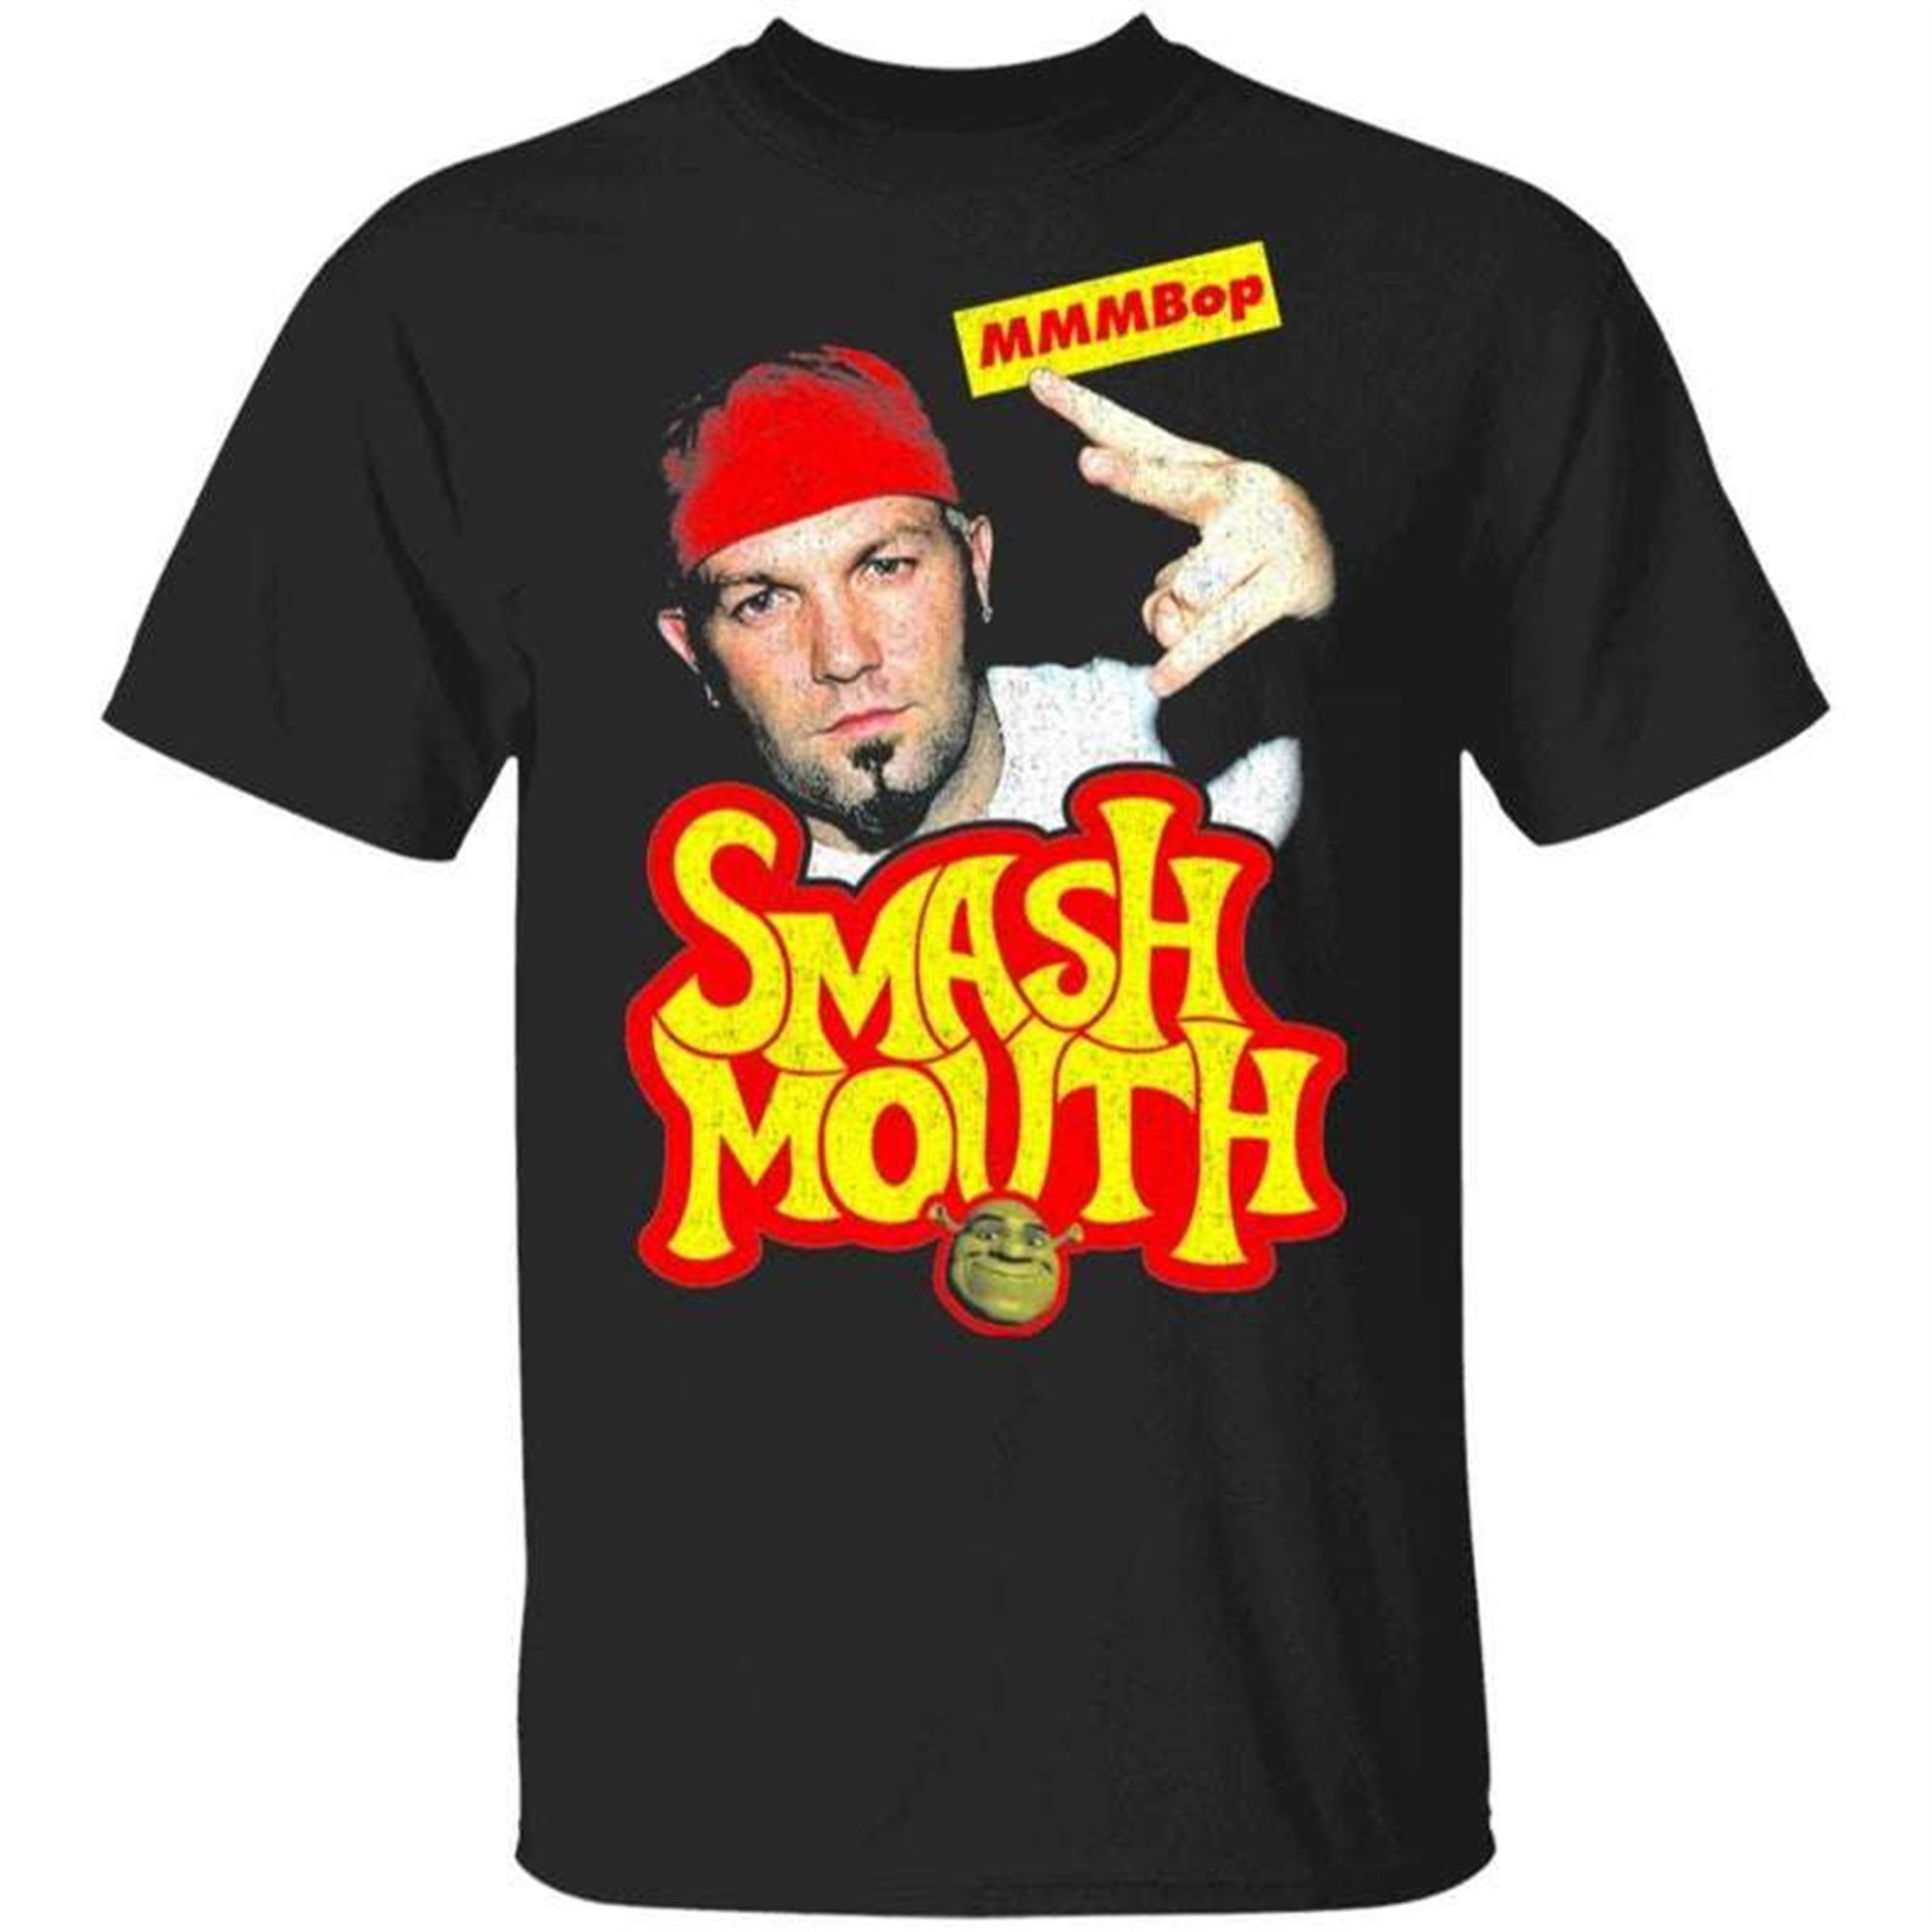 Limp Bizkit Smash Mouth Hanson Mmbop T-shirt Full Size Up To 5xl